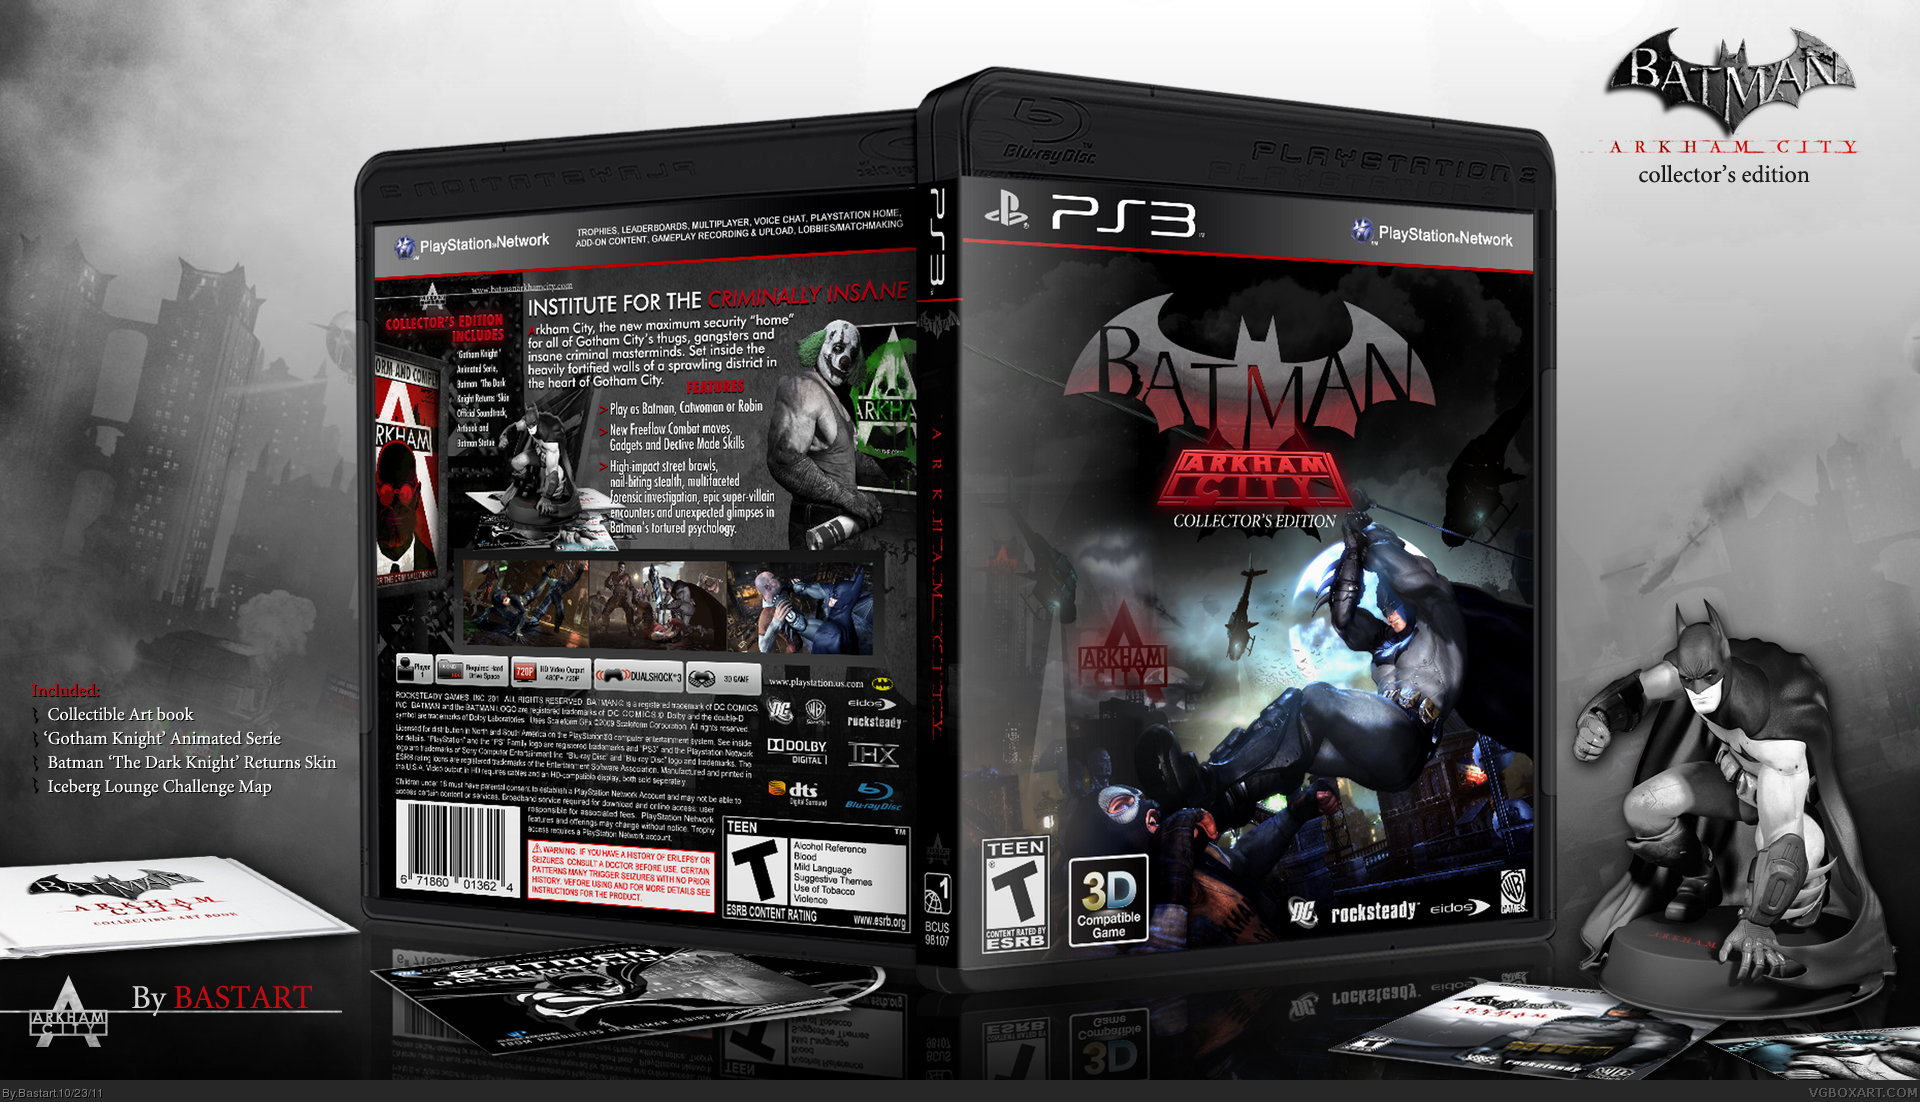 Batman trilogy switch. Batman Аркхем Сити ps3. Бэтмен Аркхем Сити коллекционное издание. Коллекционное издание Бэтмен Аркхем кнайт. Batman: Arkham Trilogy collection ps3.